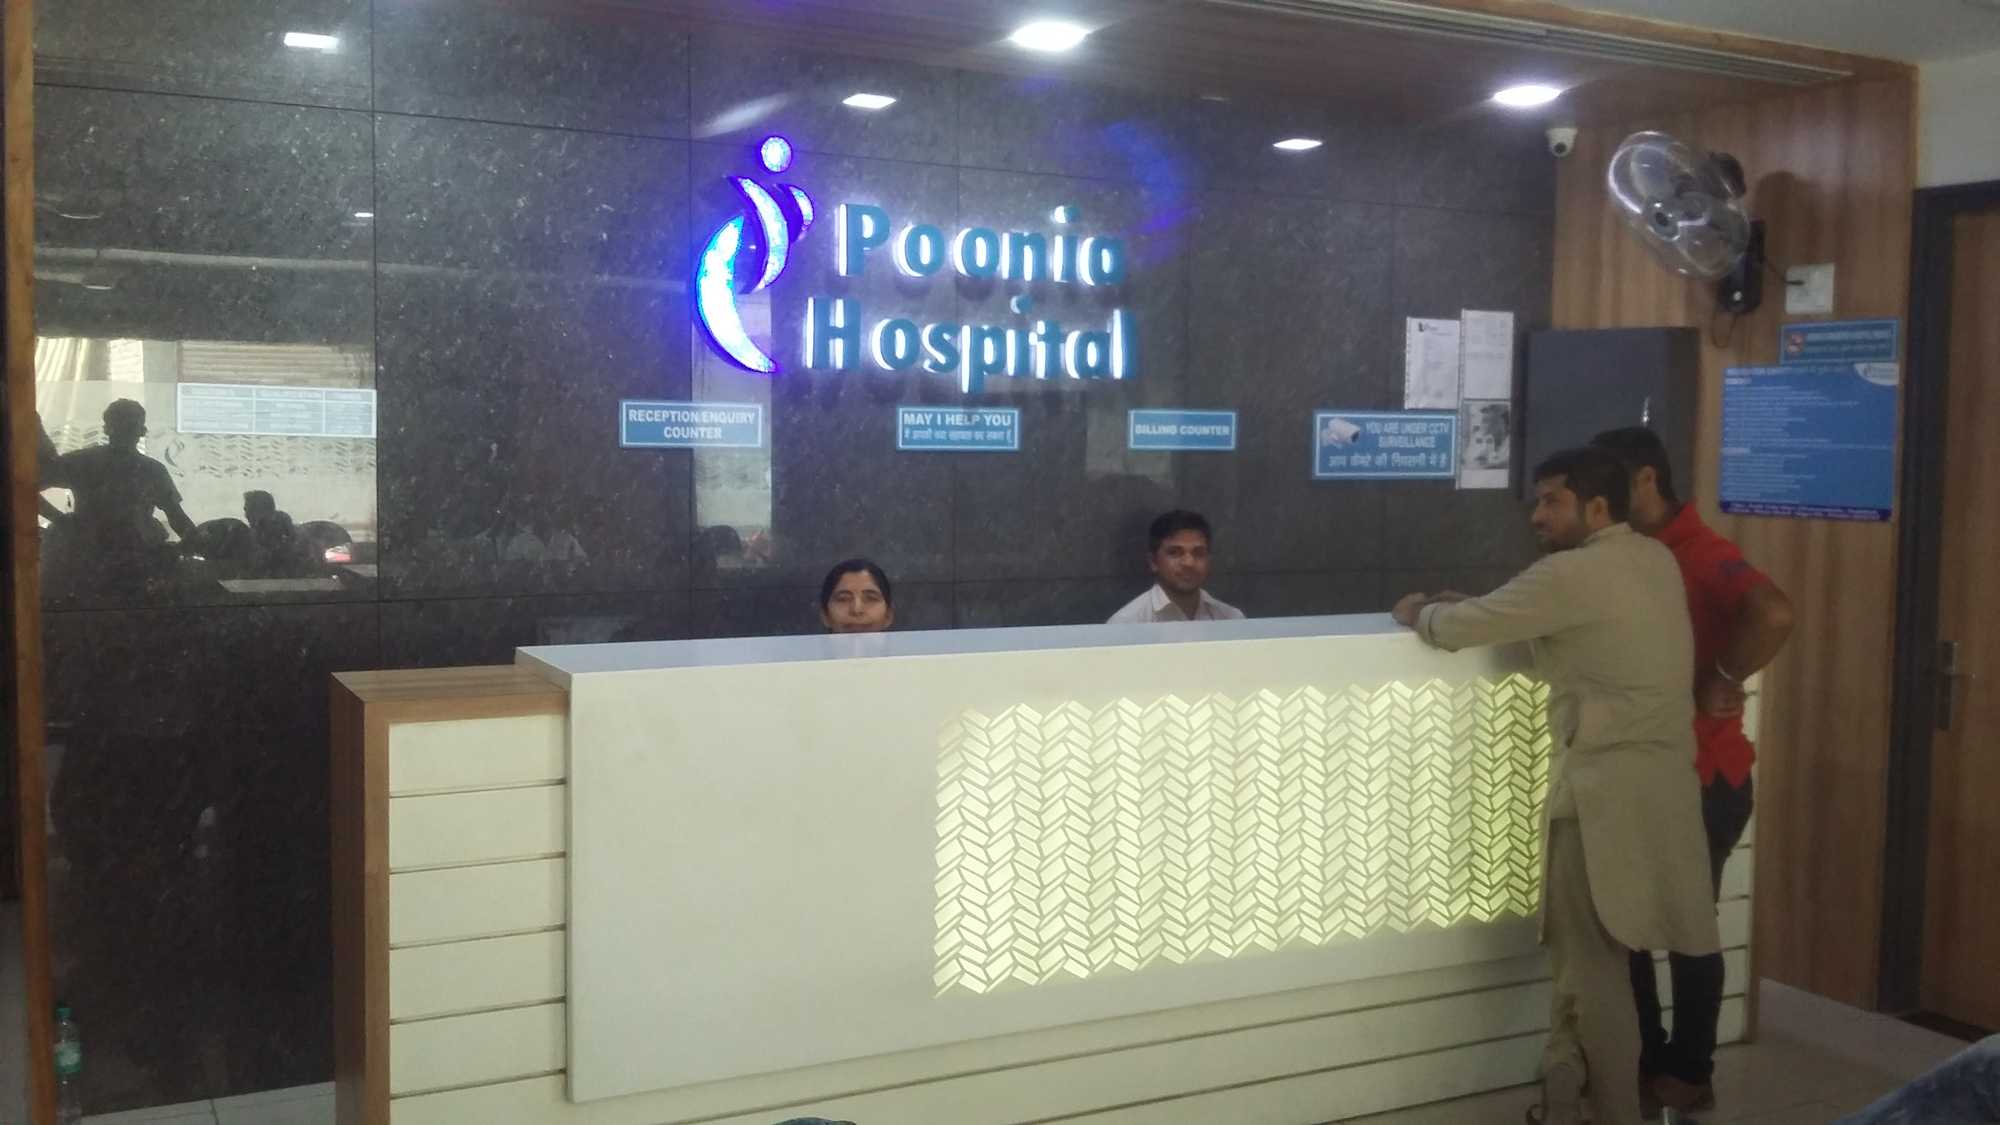 Poonia Hospital Logo